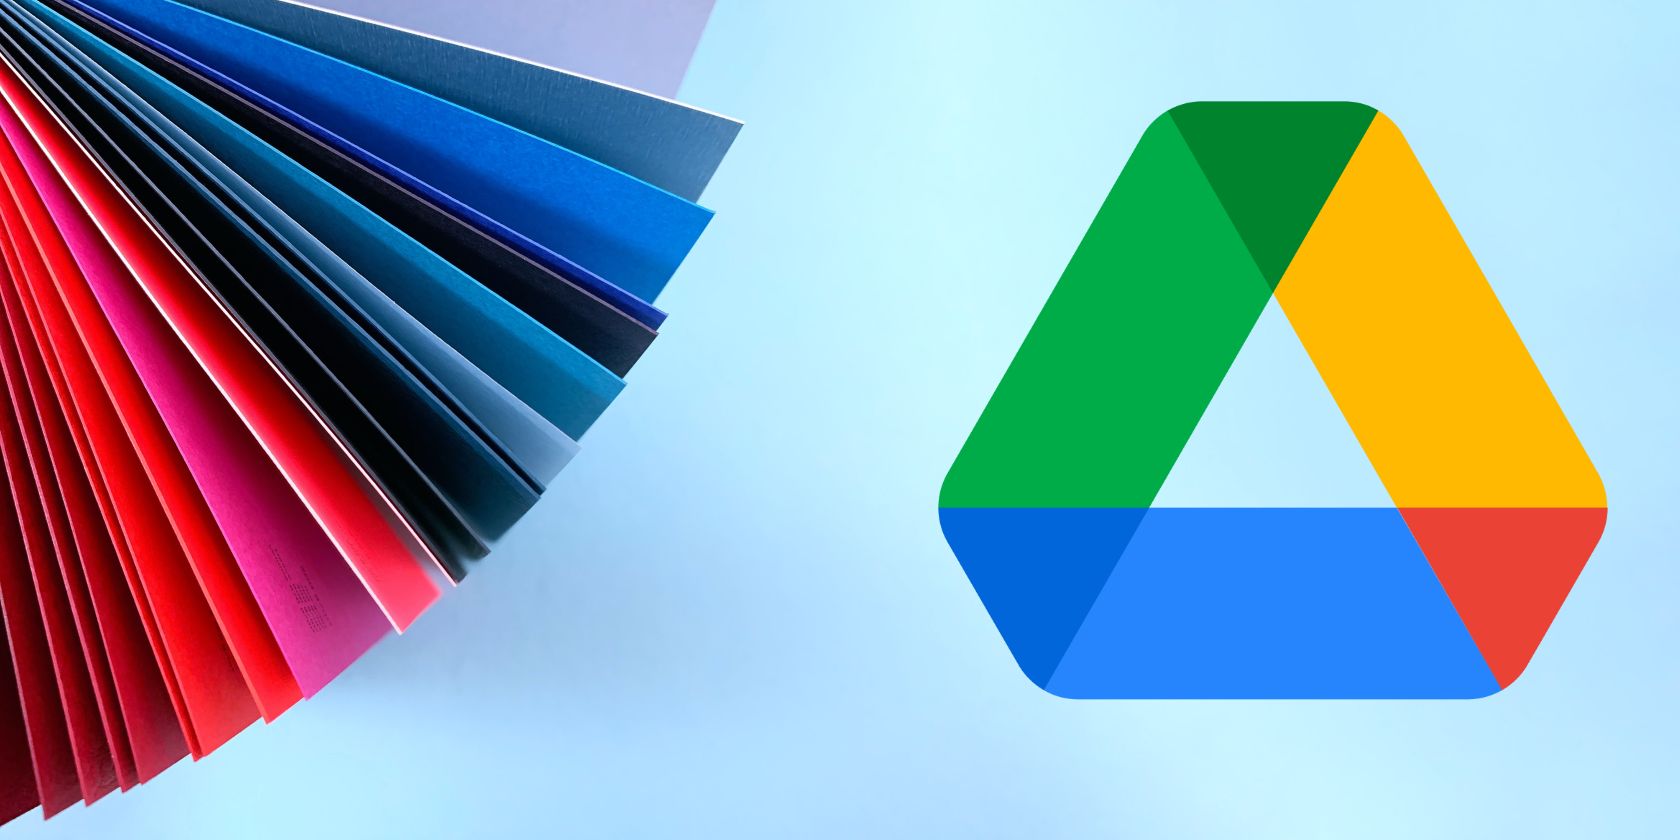 Organized file folders with the Google Drive logo